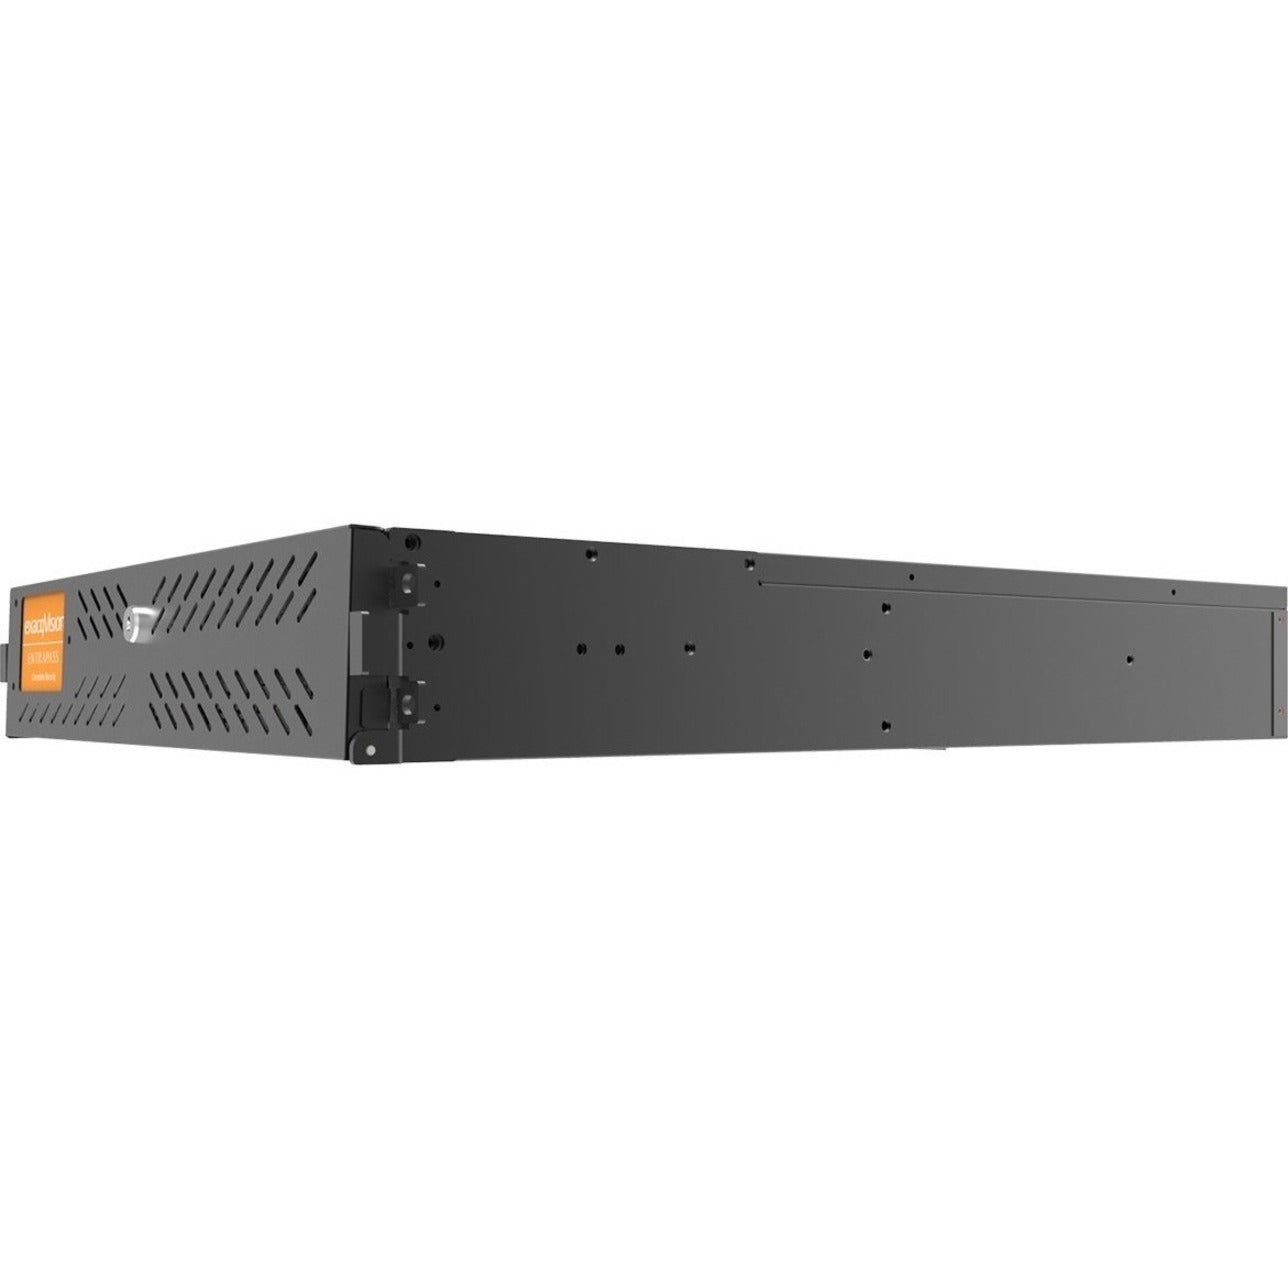 Exacq exacqVision Z Network Surveillance Server - 6 TB HDD